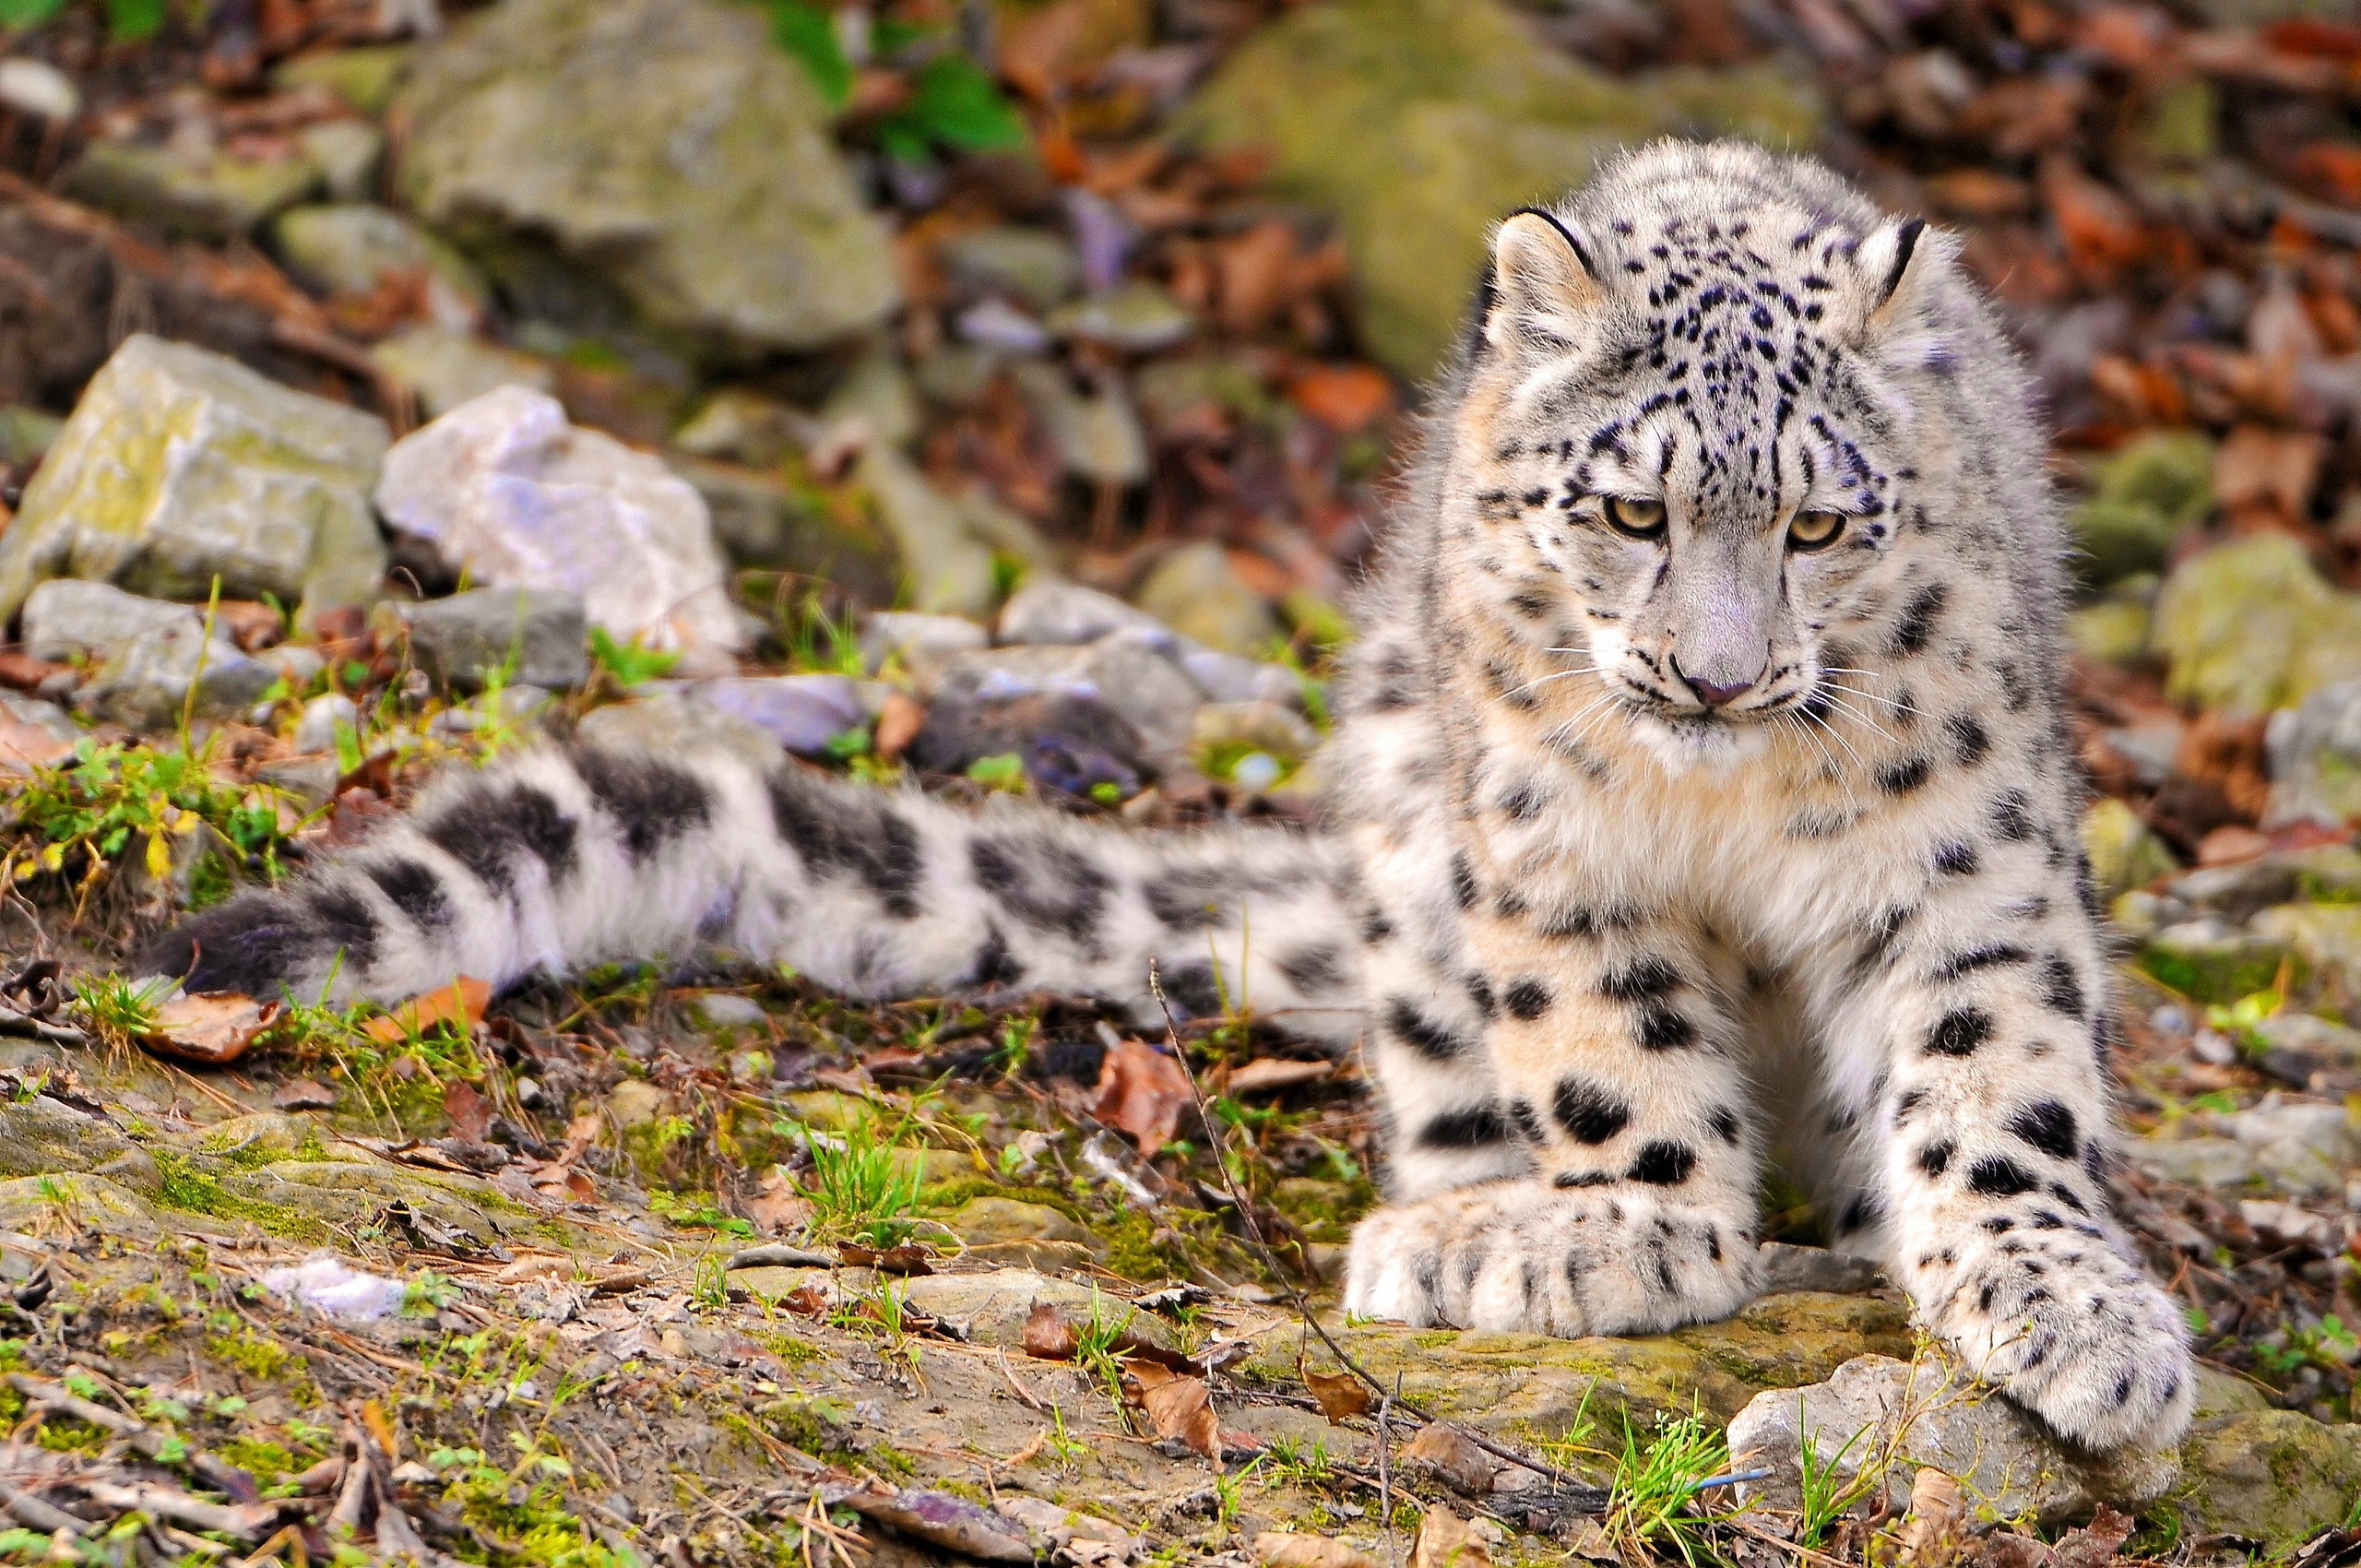 Snow leopard, found in mountainous regions of Eastern Asia